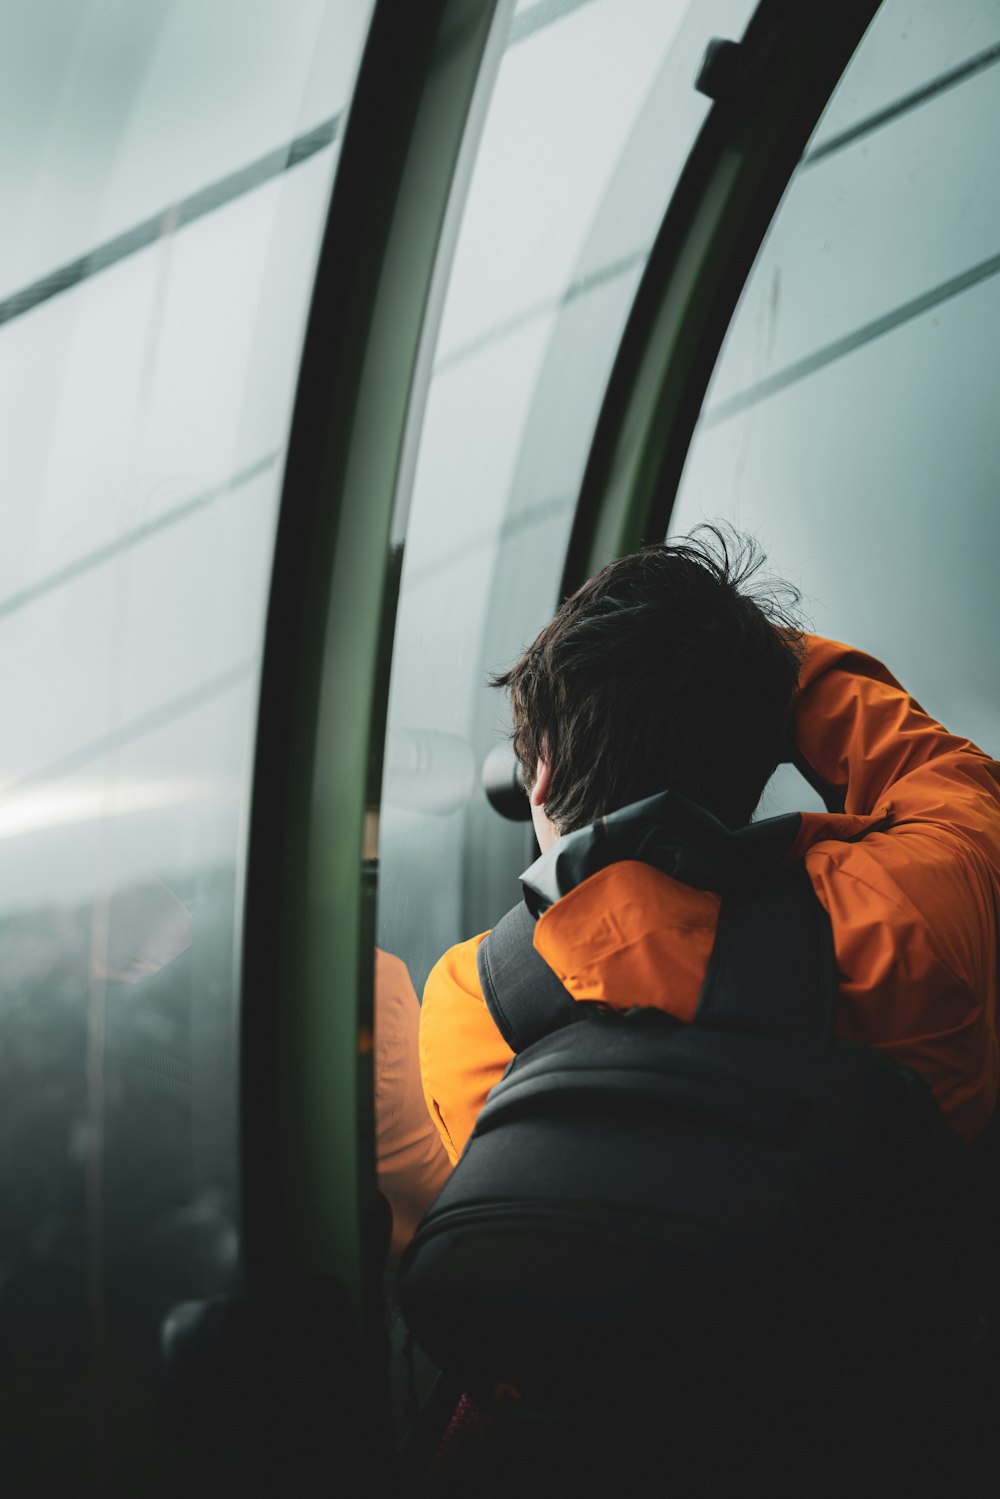 a man in an orange jacket sitting on a train